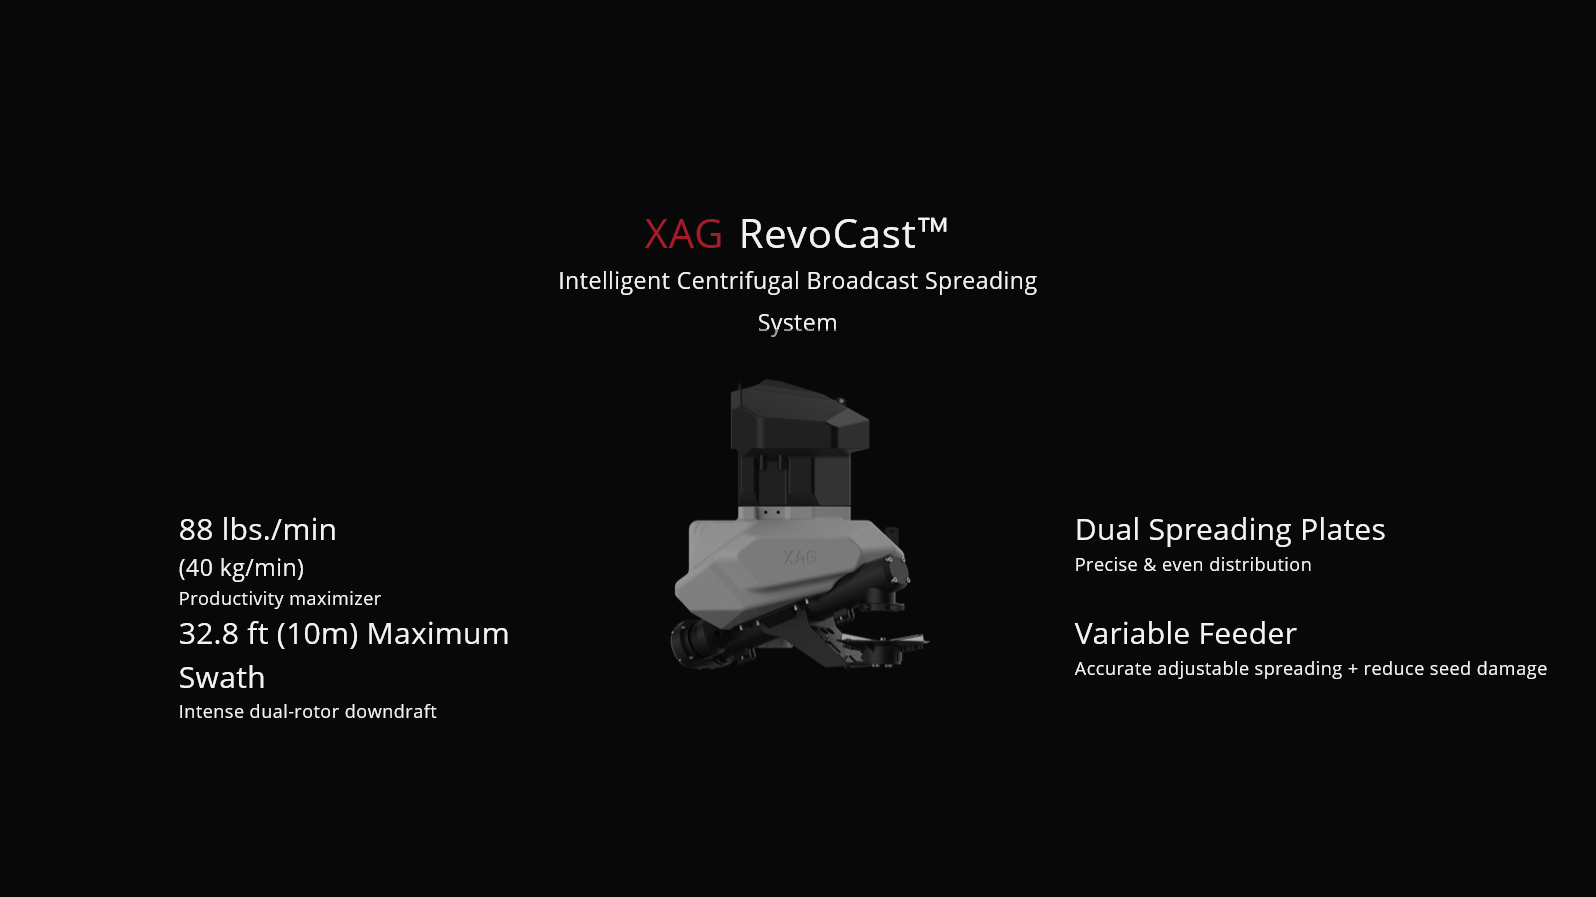 XAG V40 15L Agricultural Drone, XKG RevoCastTm Intelligent Centrifugal Broadcast Spread